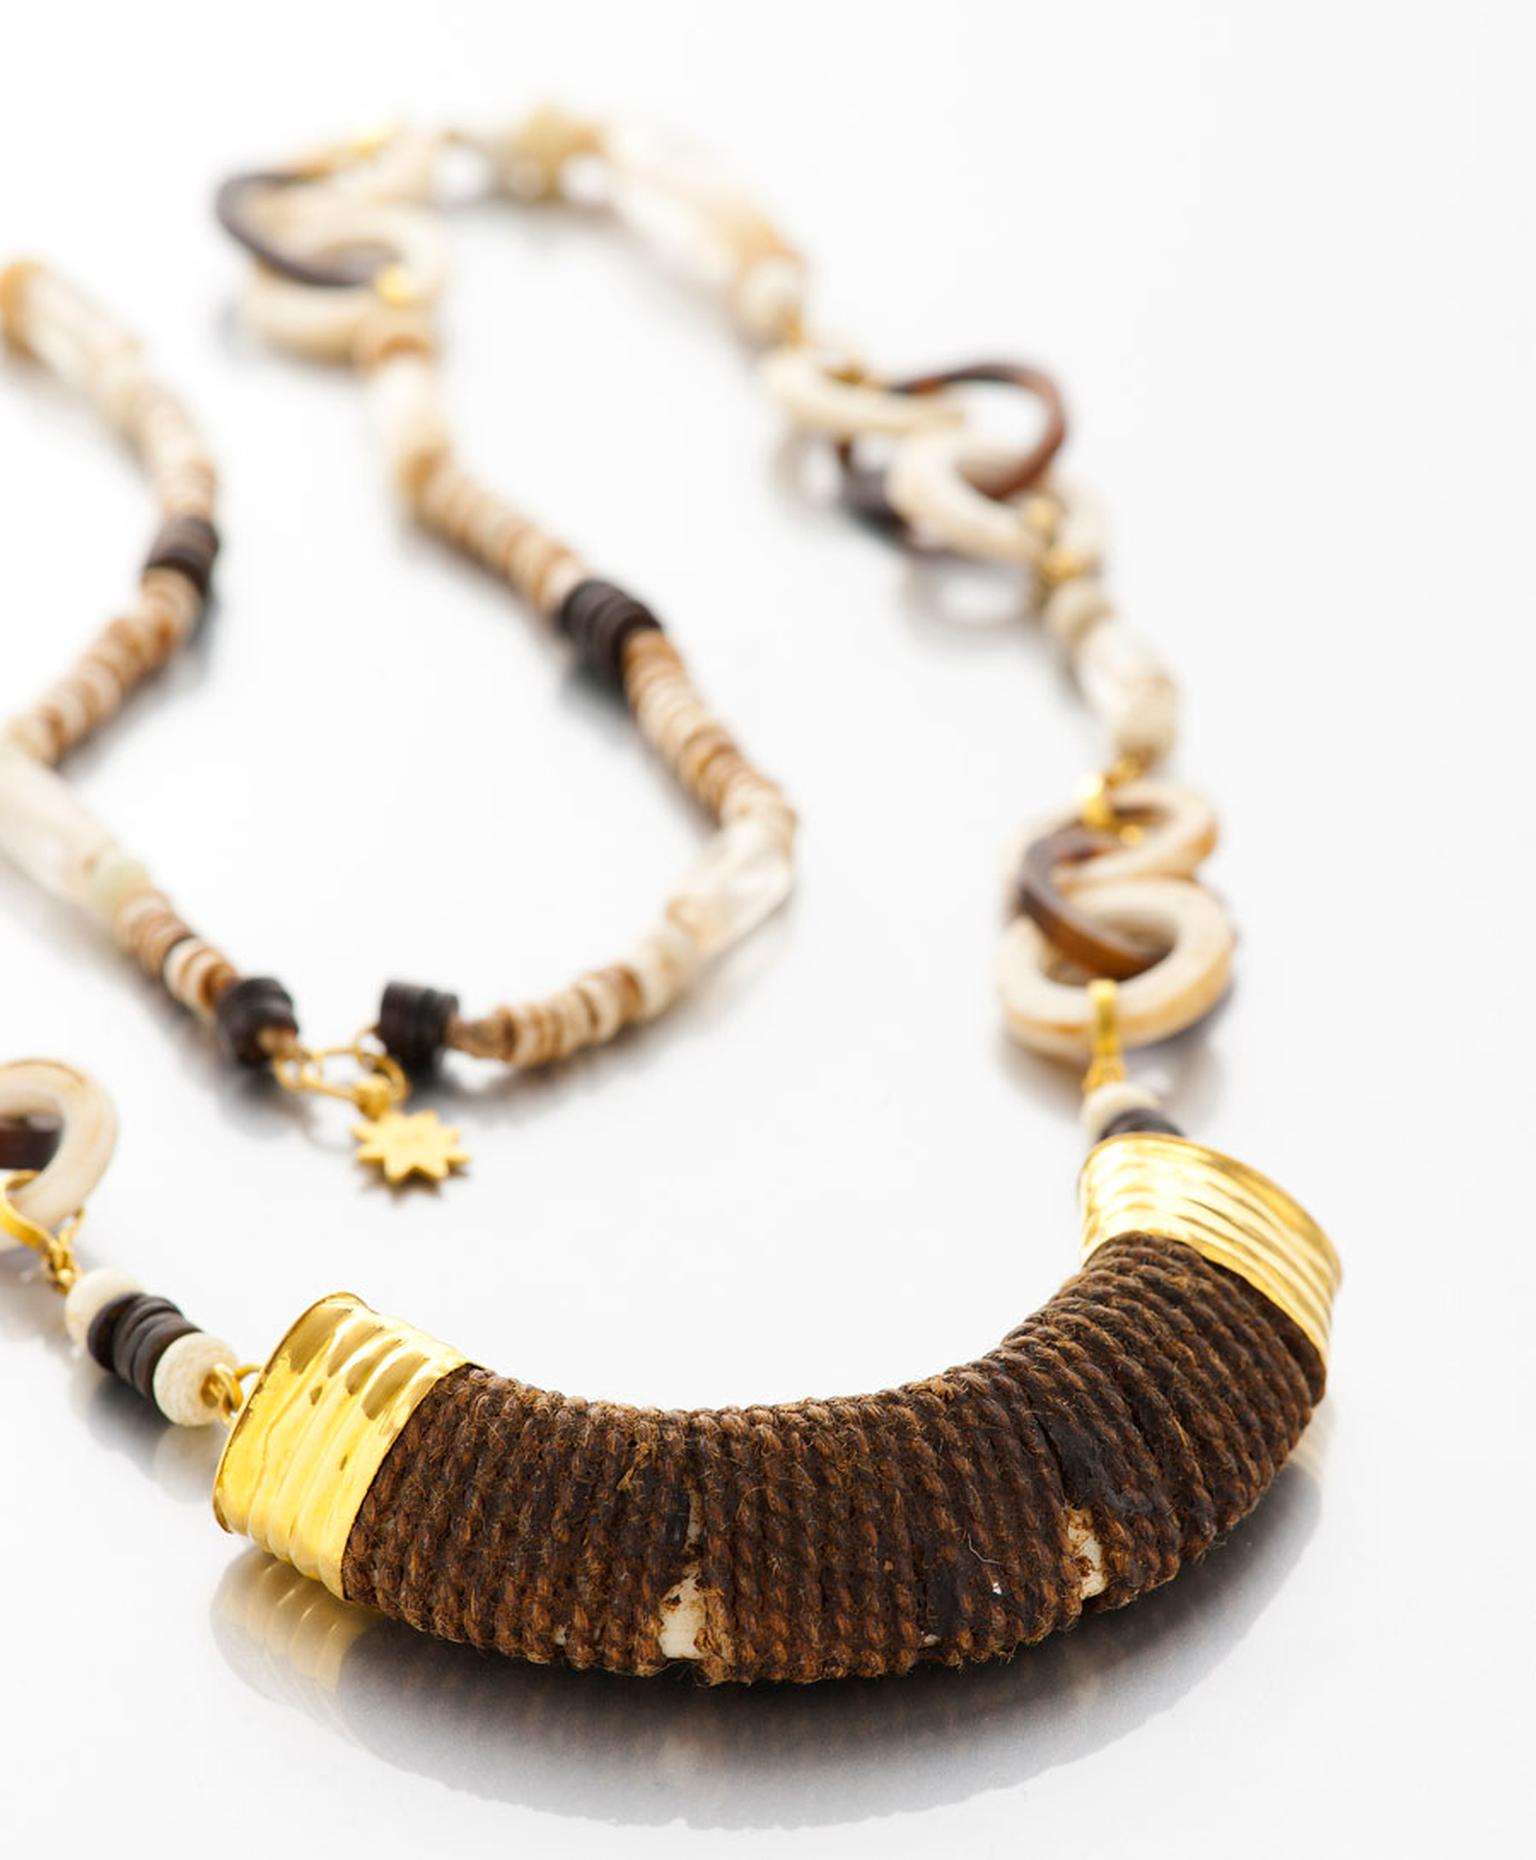 Lisa-Black-Boars-Tusk-Pendant-on-Necklace-of-Shell-and-Tortoise.jpg